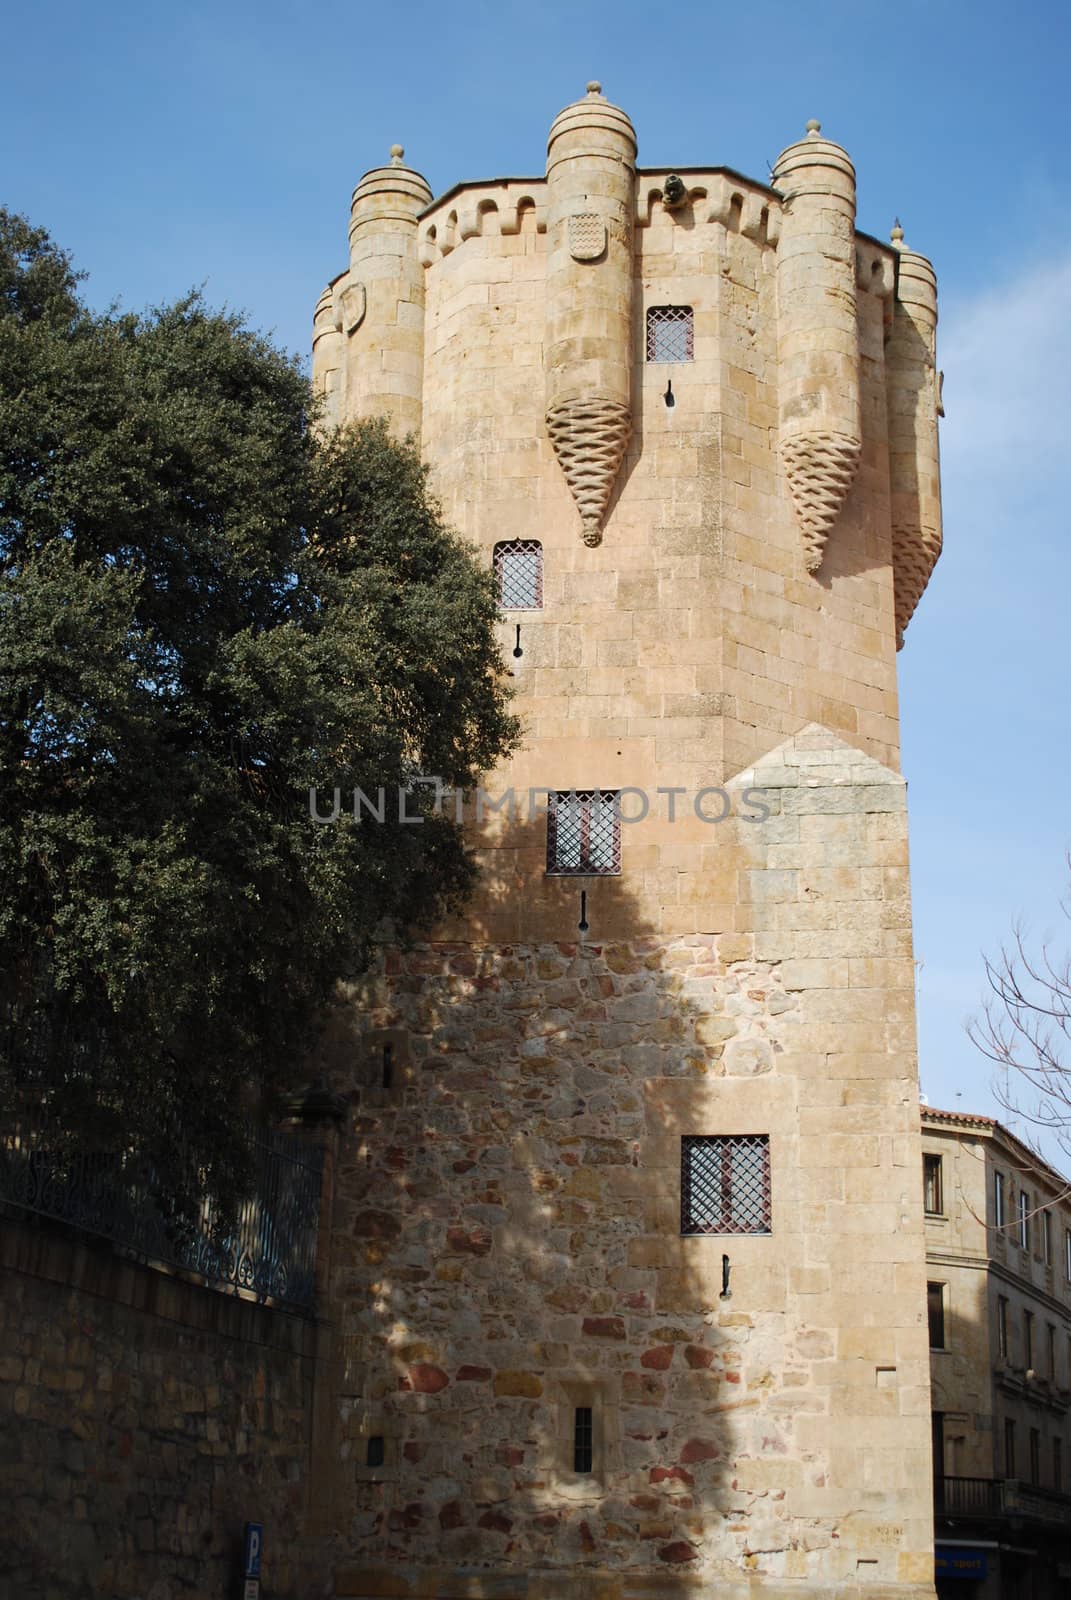 Tower of Clavero in Salamanca, Spain by luissantos84